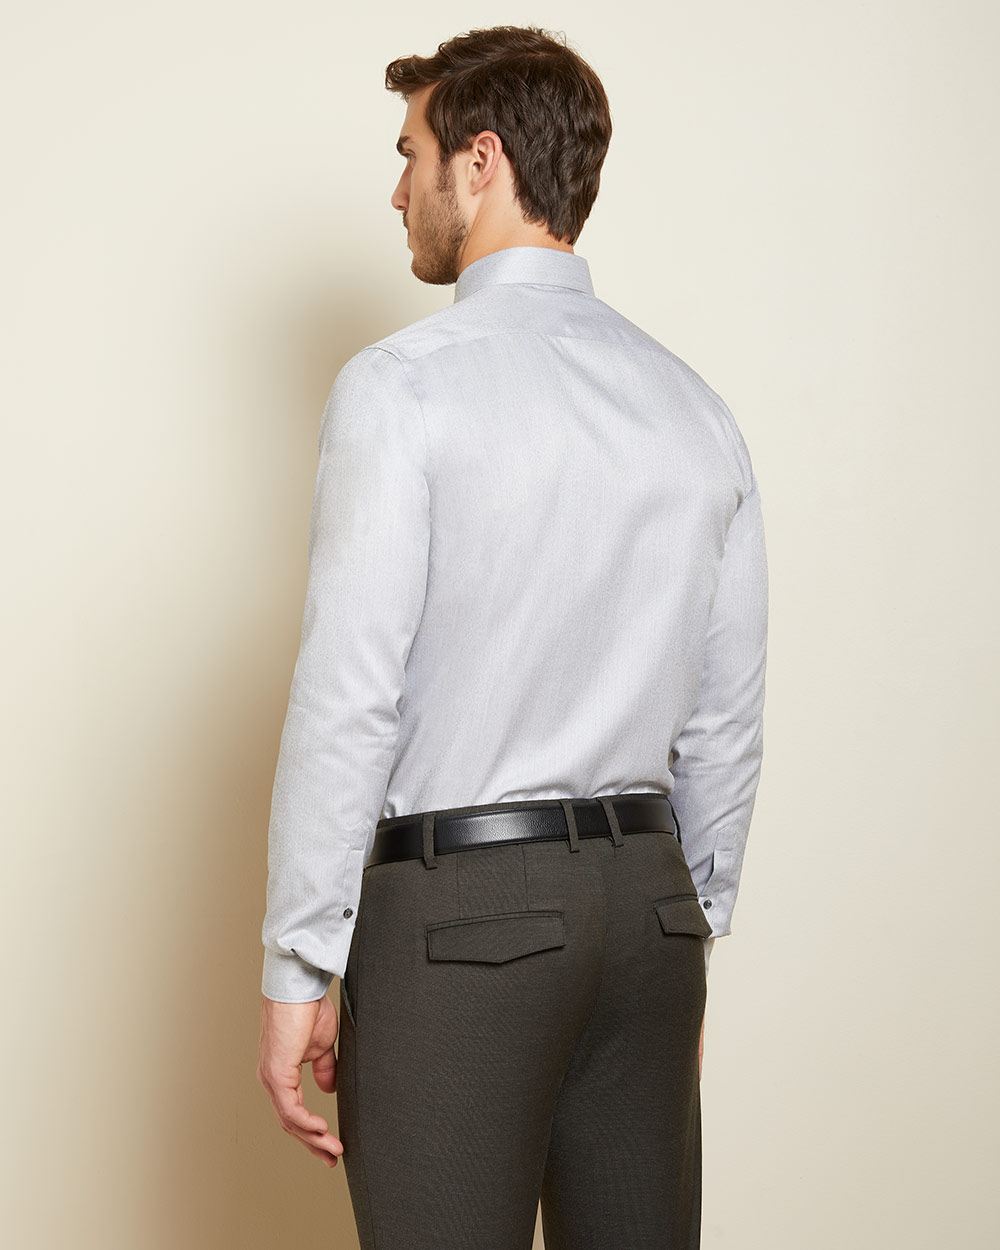 Slim fit light grey dress shirt | RW☀CO.